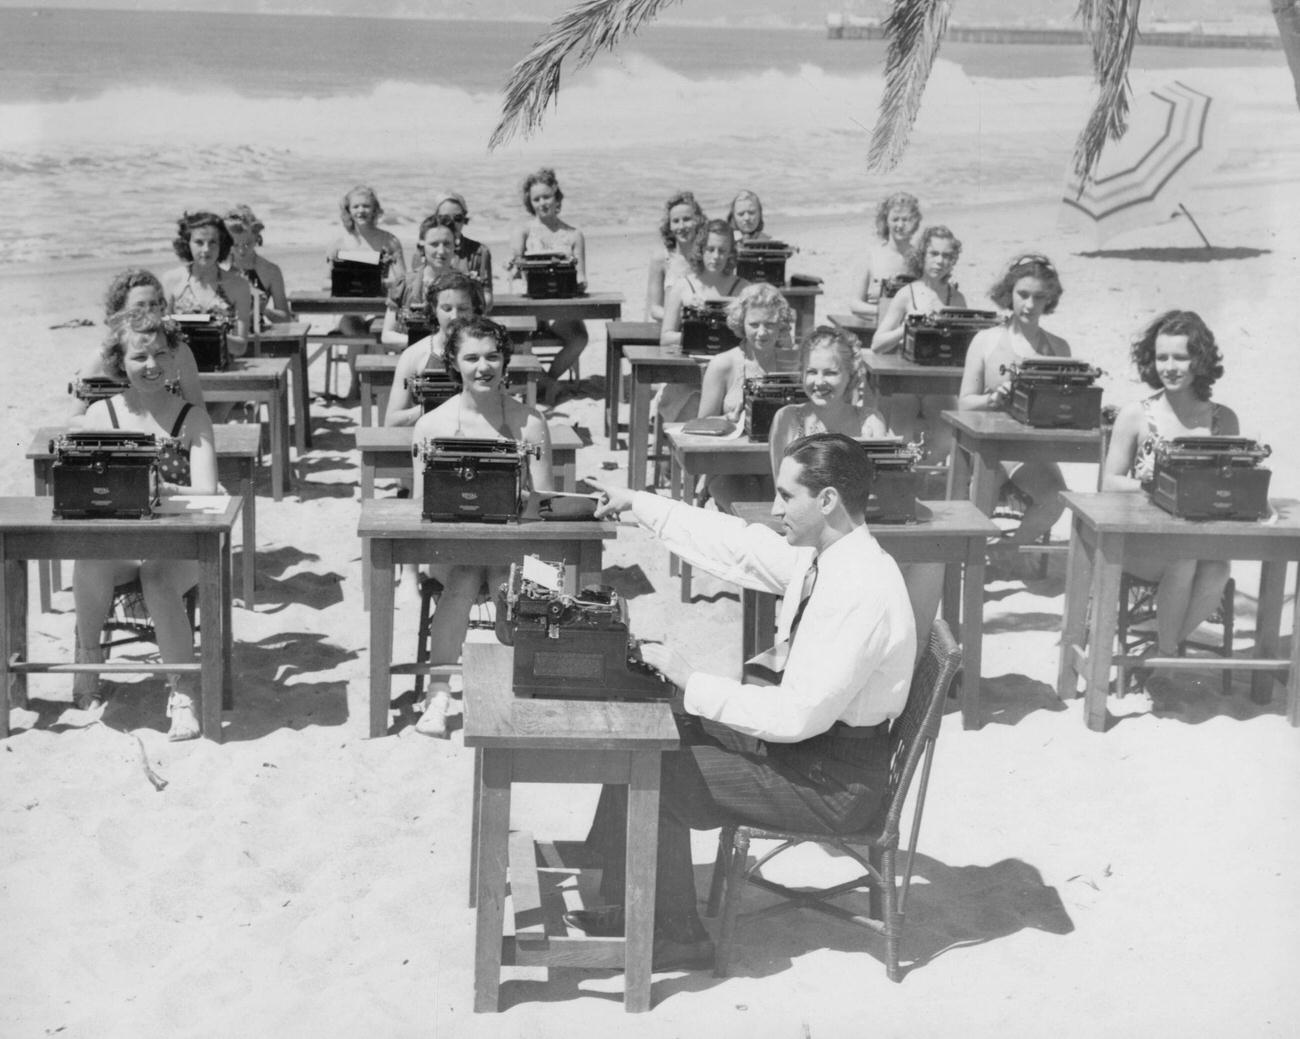 World champion typist Albert Tangira teaching typing class on a beach, 1920s or 1930s.